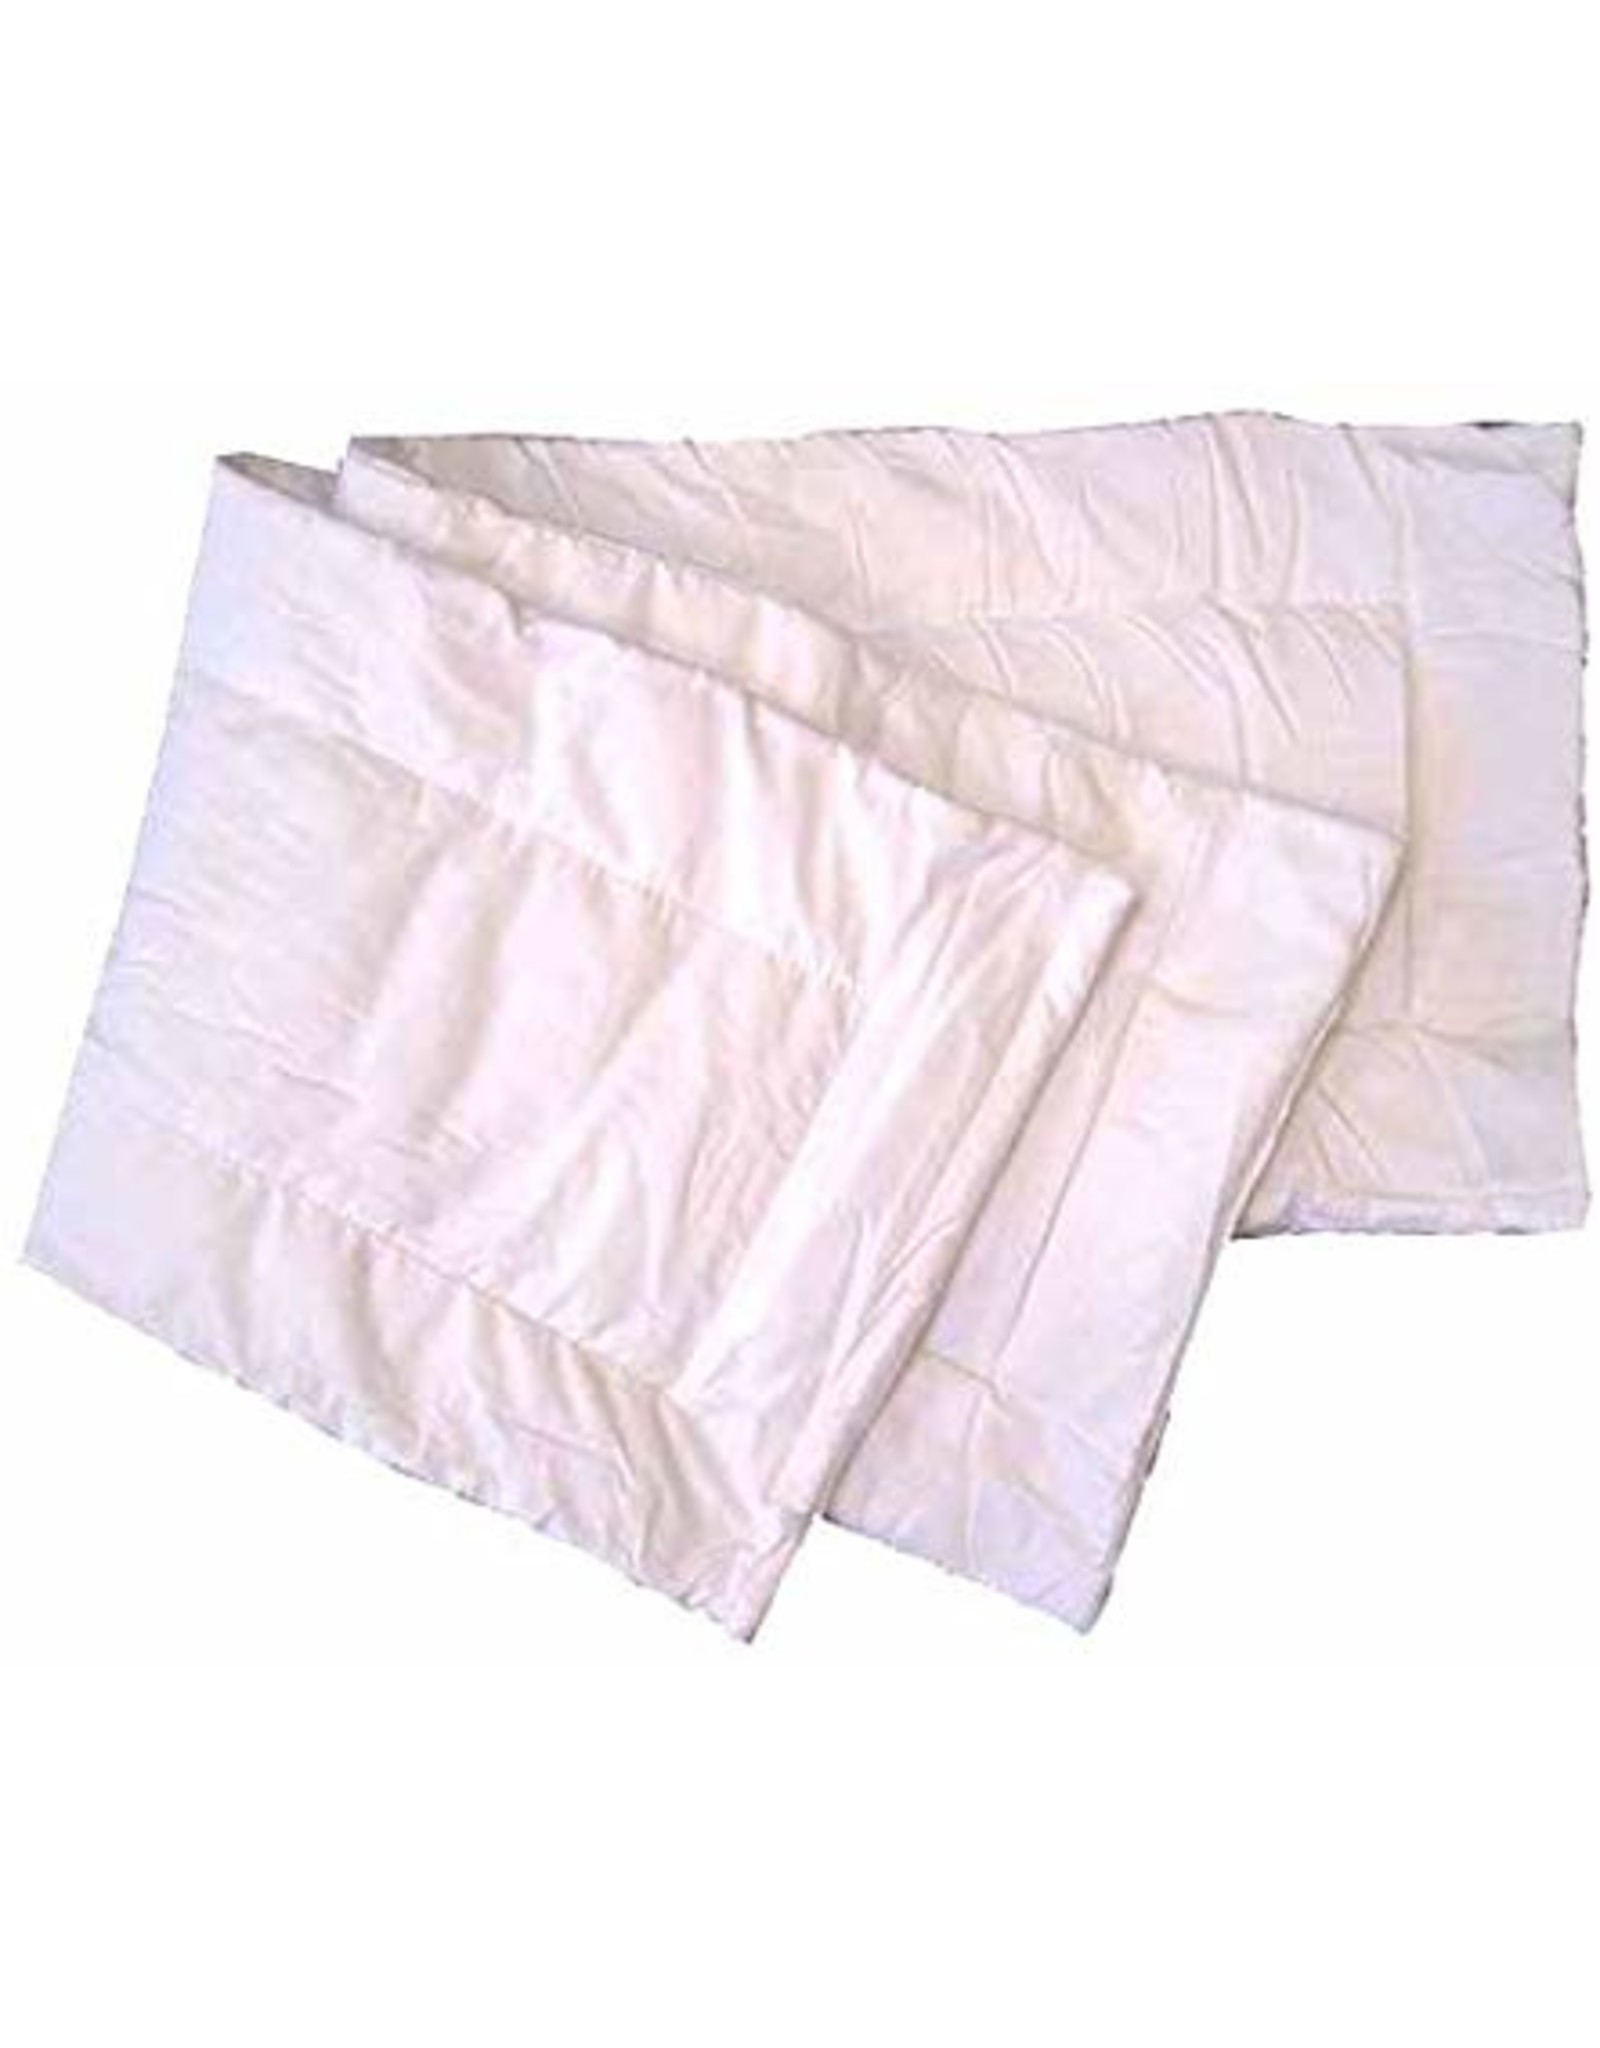 Intrepid International Cotton Pillow Wraps